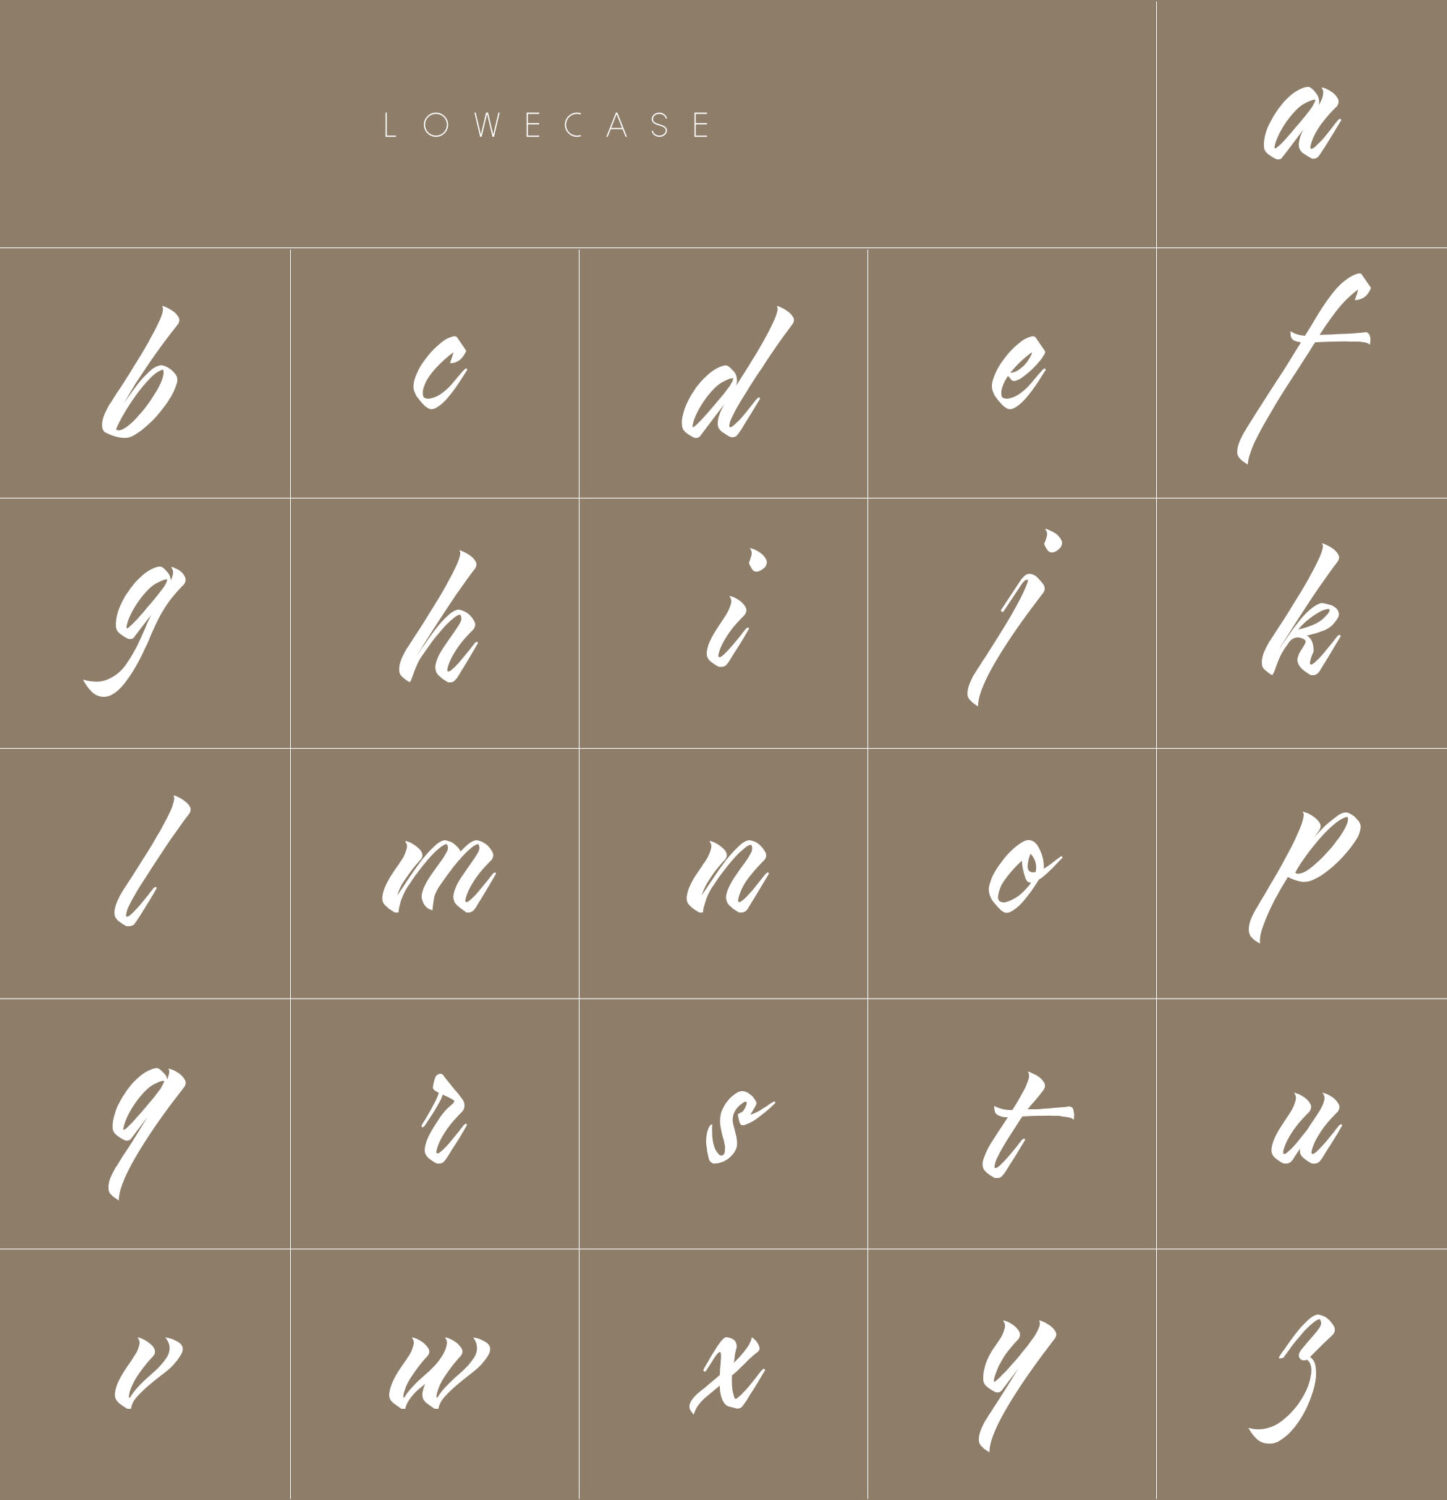 Viana Script Free Typeface